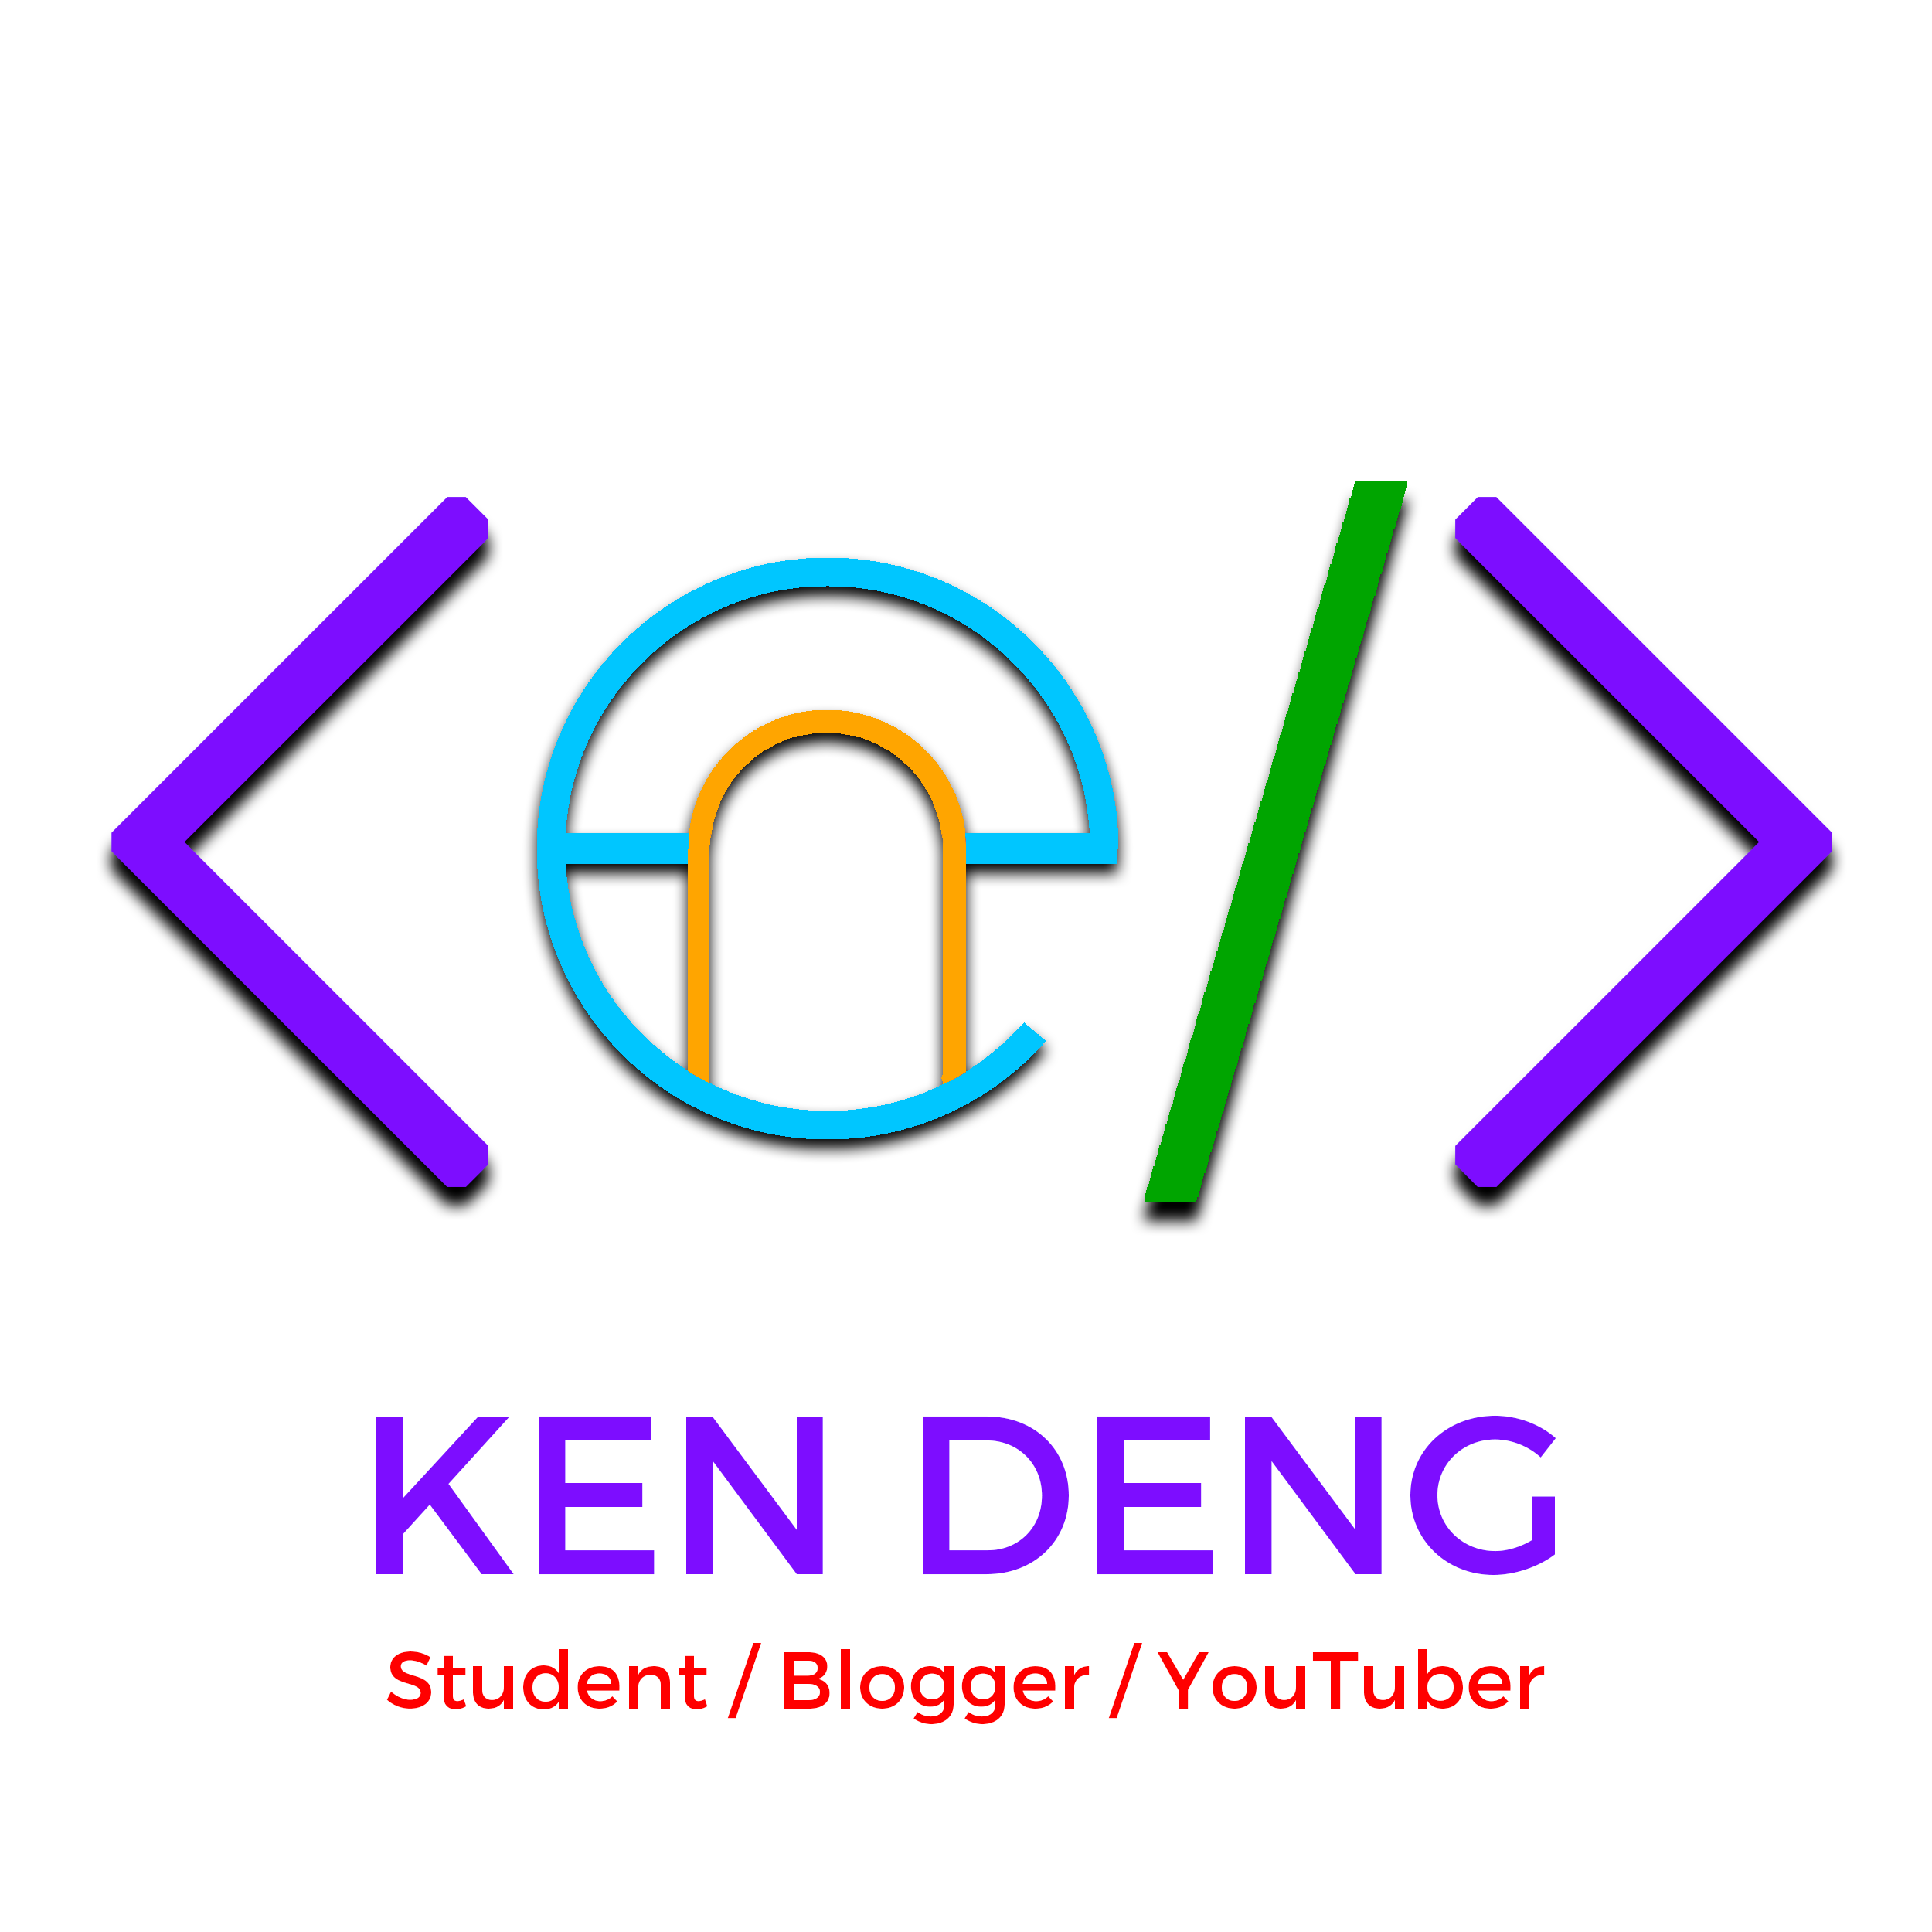 Ken Deng Logo 2019 Full Square with Name White Background